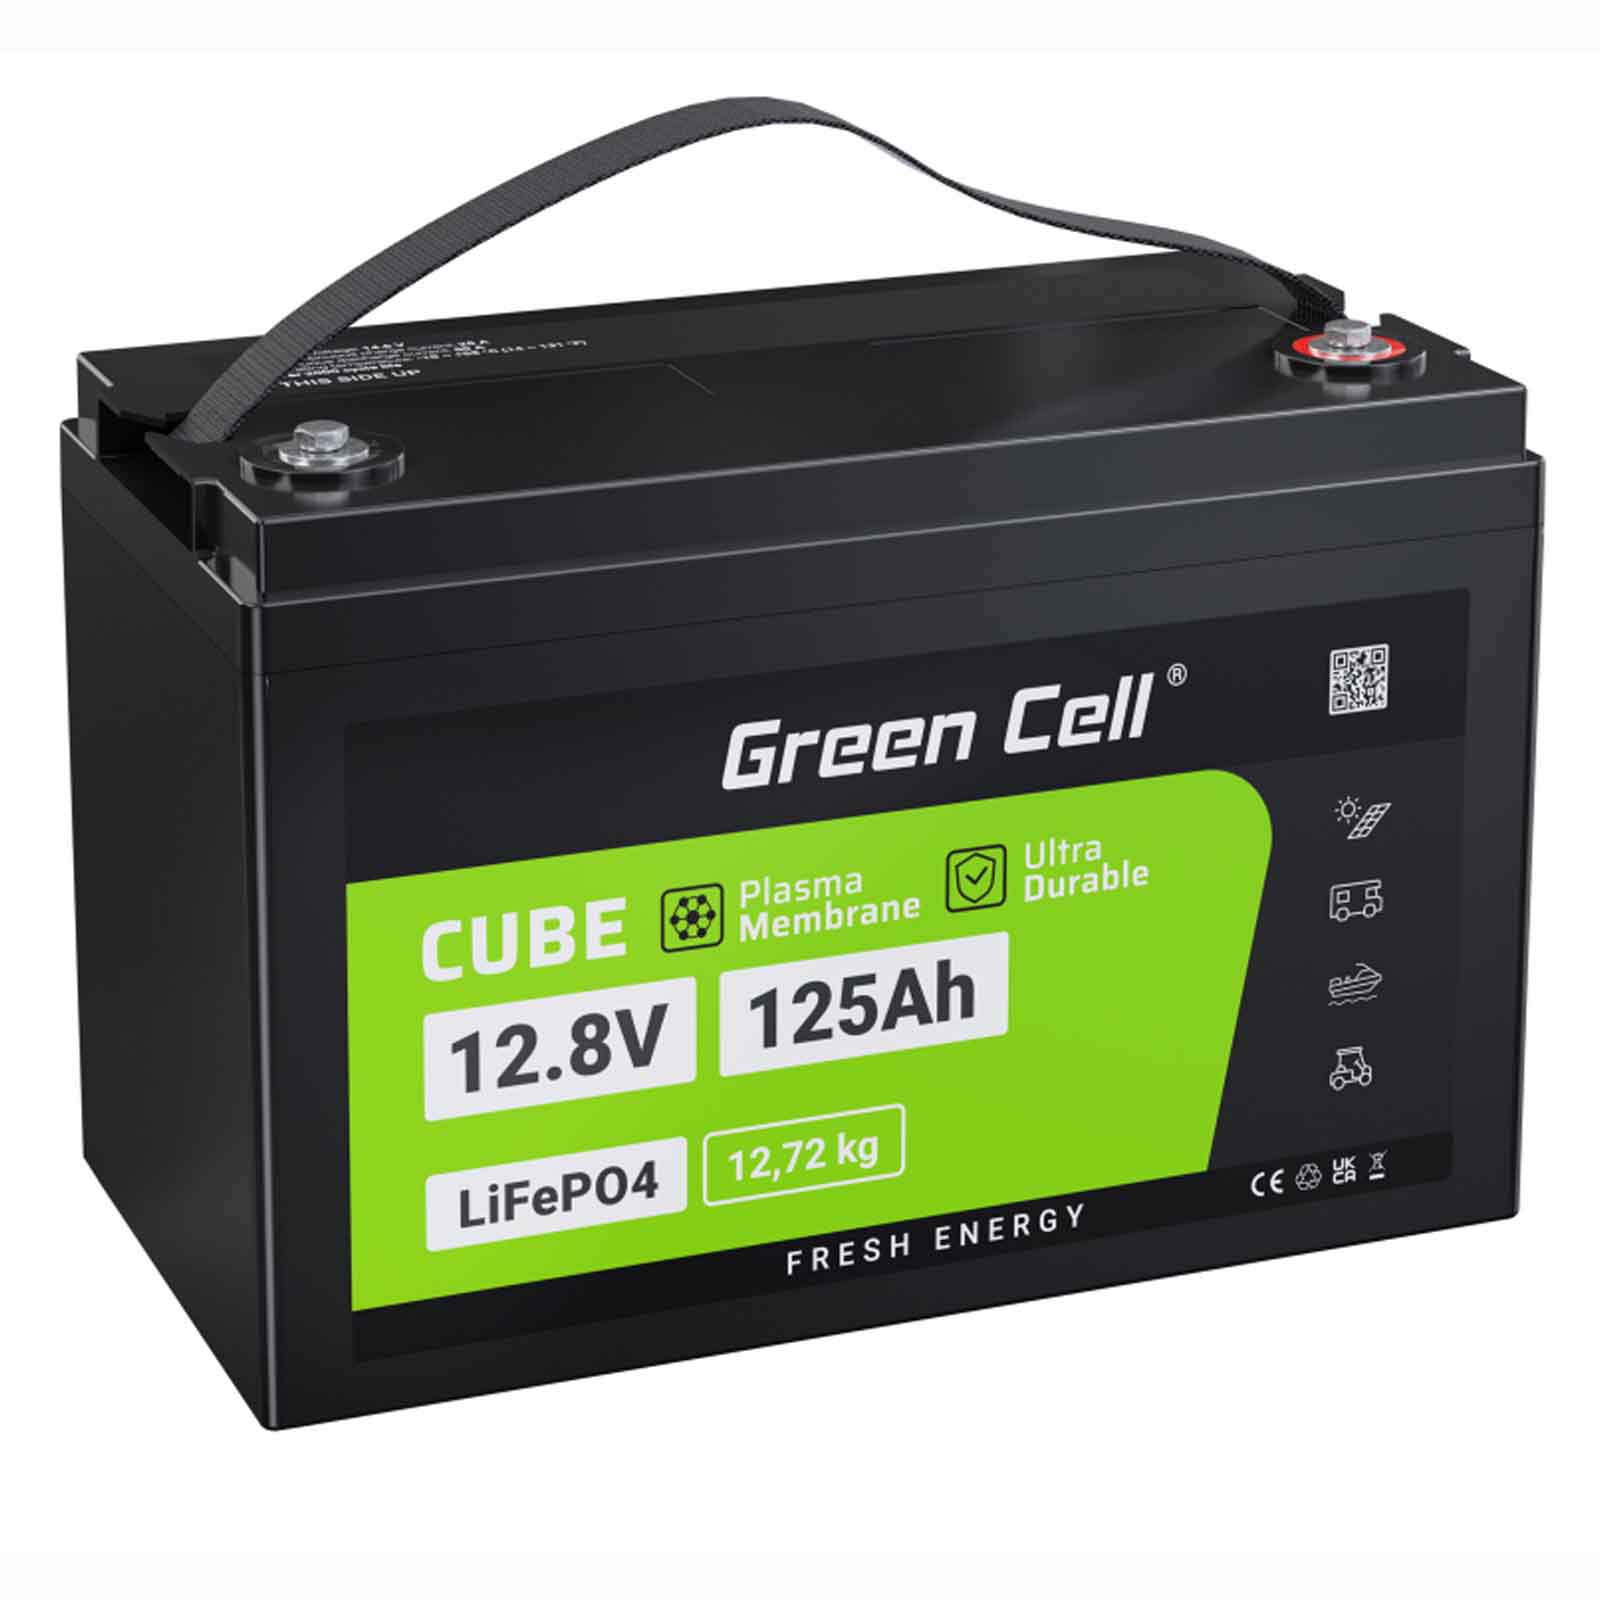 Akumulator Green Cell LiFePO4 12.8V 125Ah 1600Wh (CAV13) ::   Dystrybutor sprzętu sieciowego